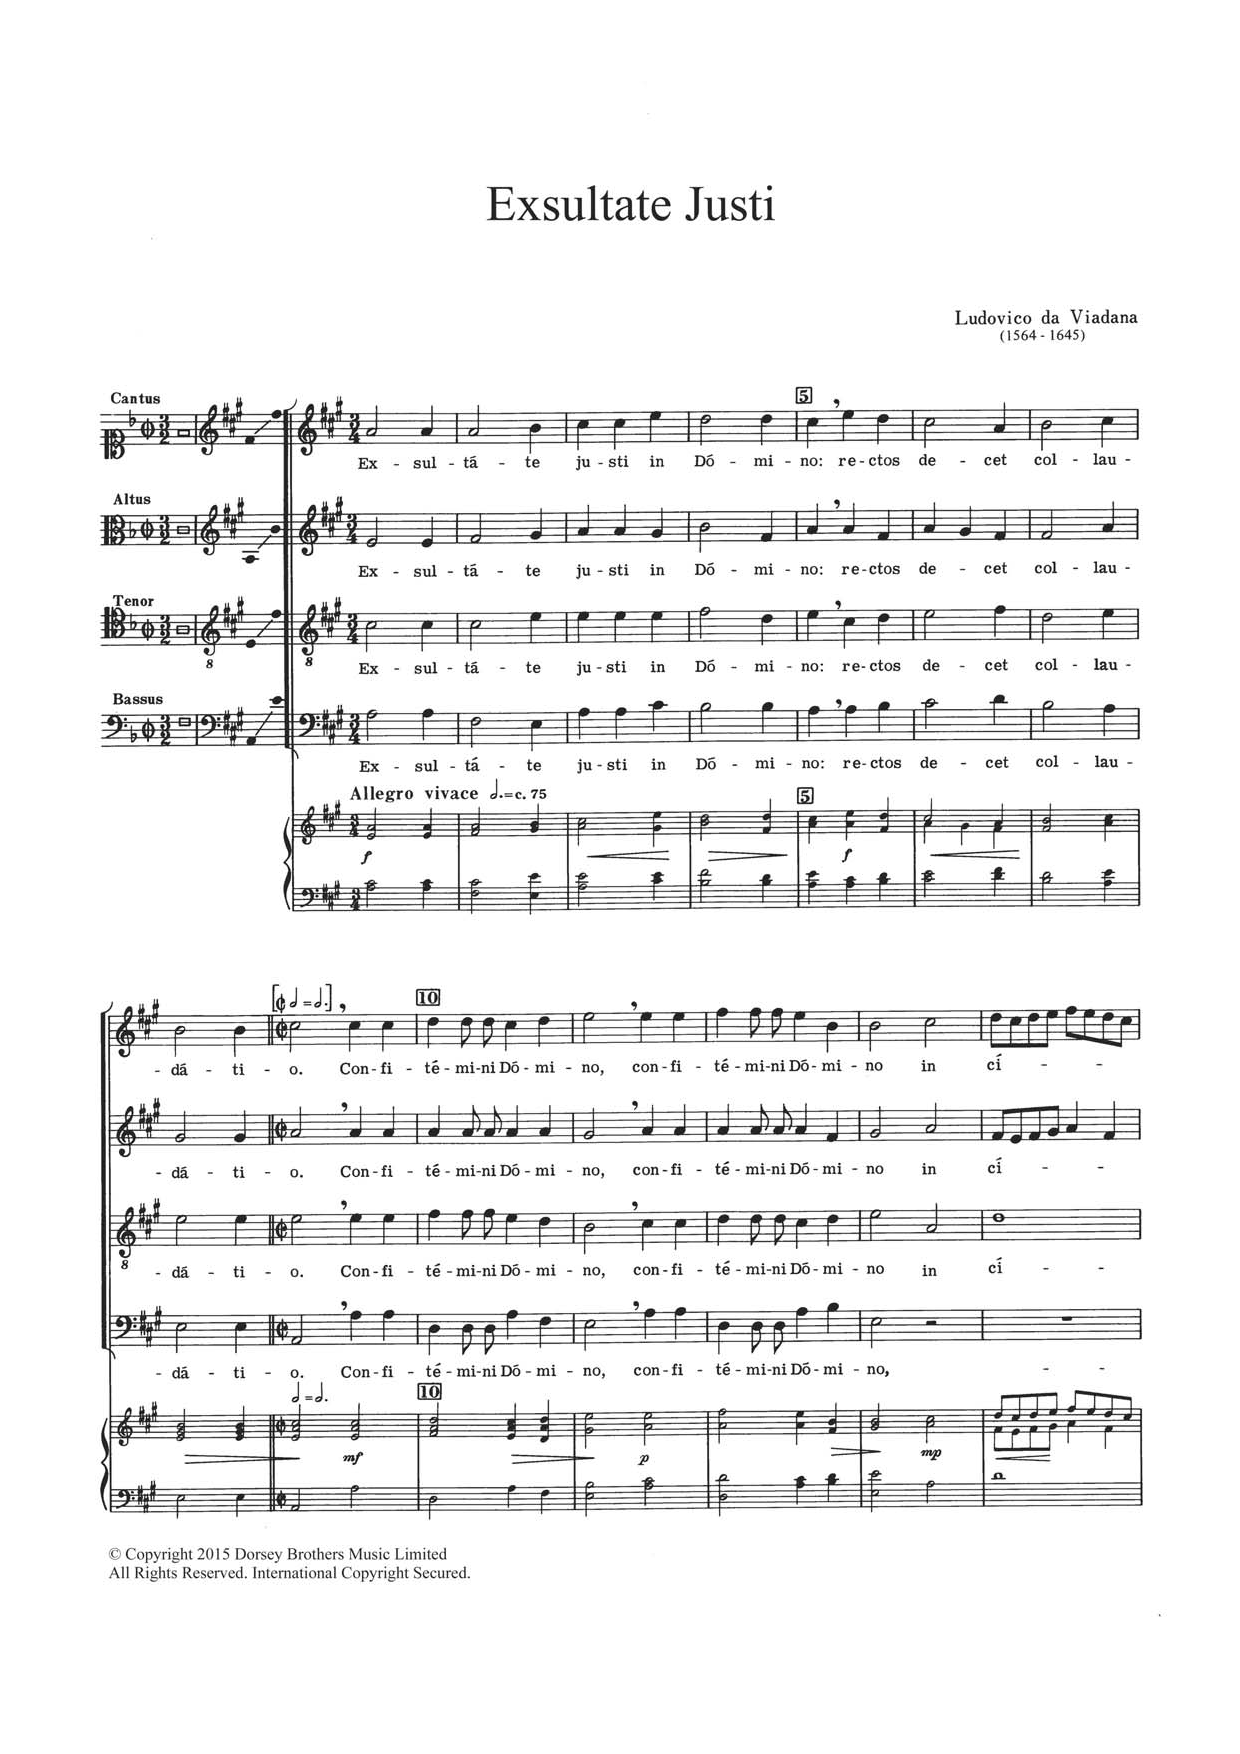 Lodovico Grossi da Viadana Exsultate Justi Sheet Music Notes & Chords for Choir - Download or Print PDF